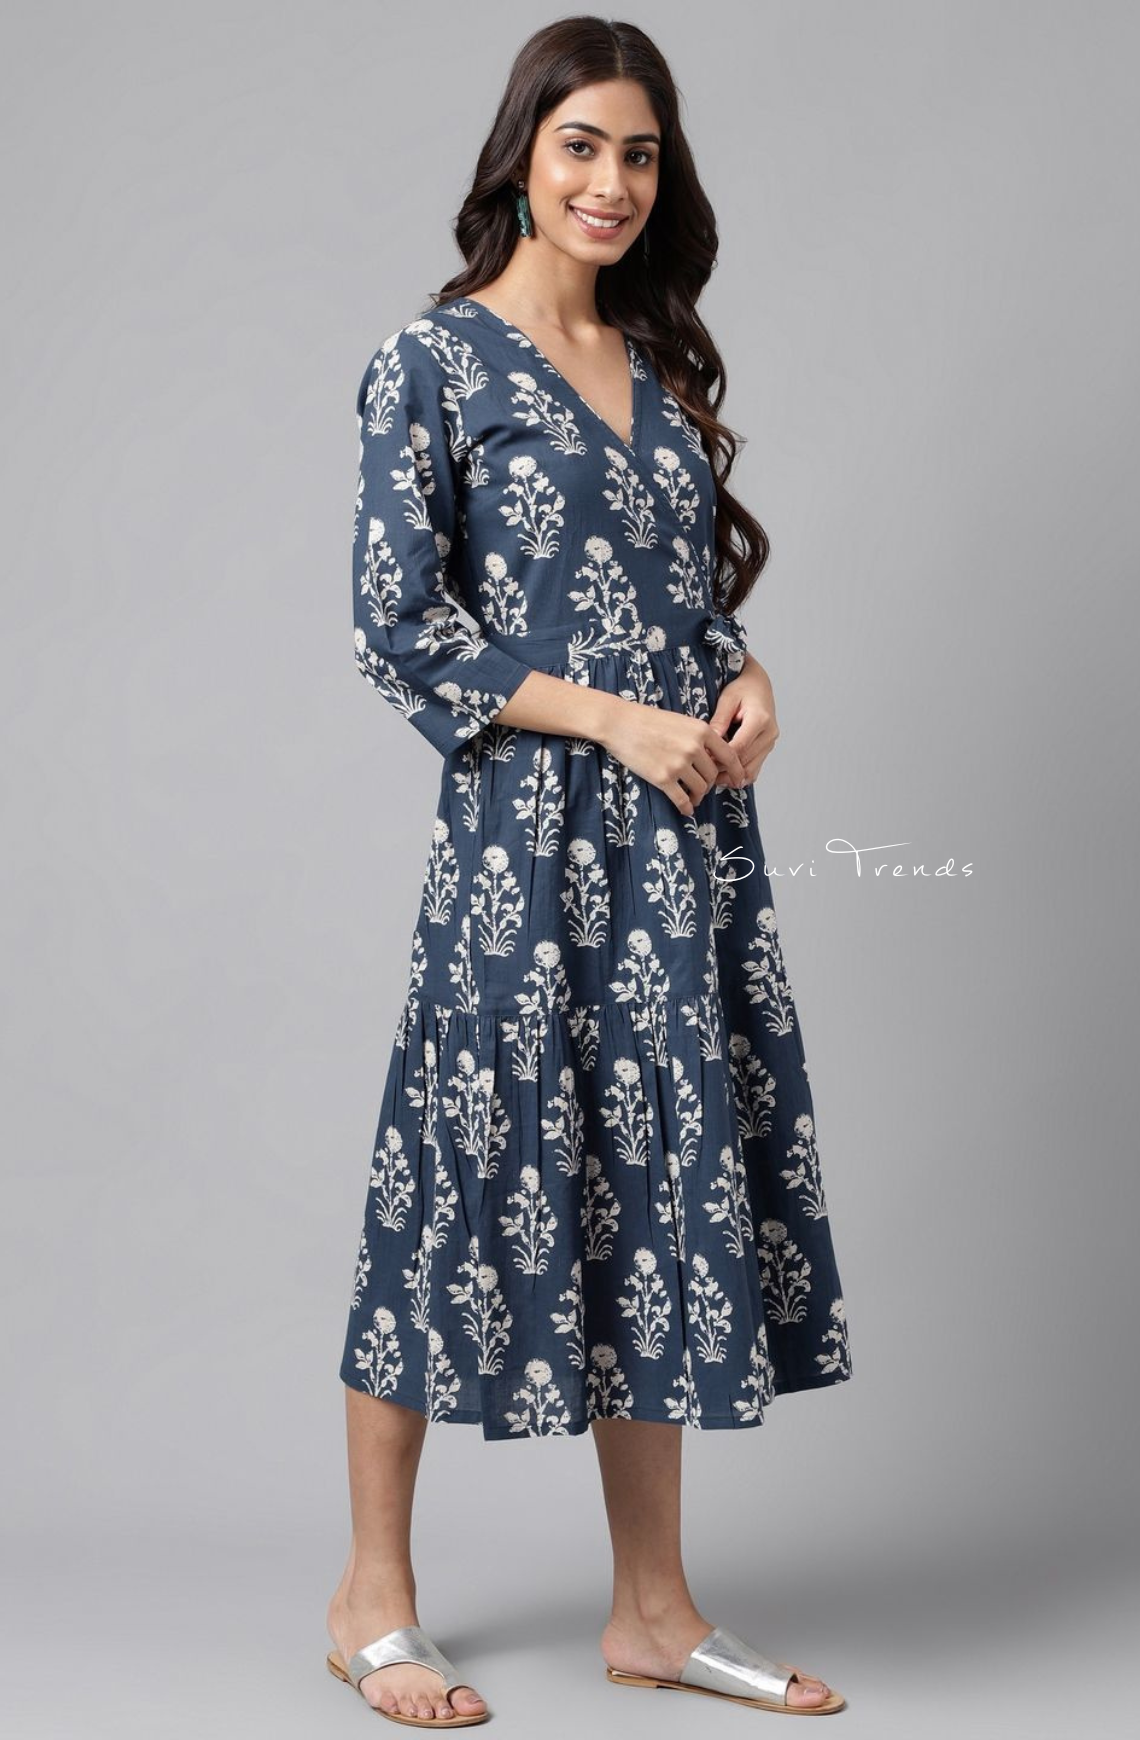 Pure Cotton Floral Printed Wrap Dress - Navy Blue